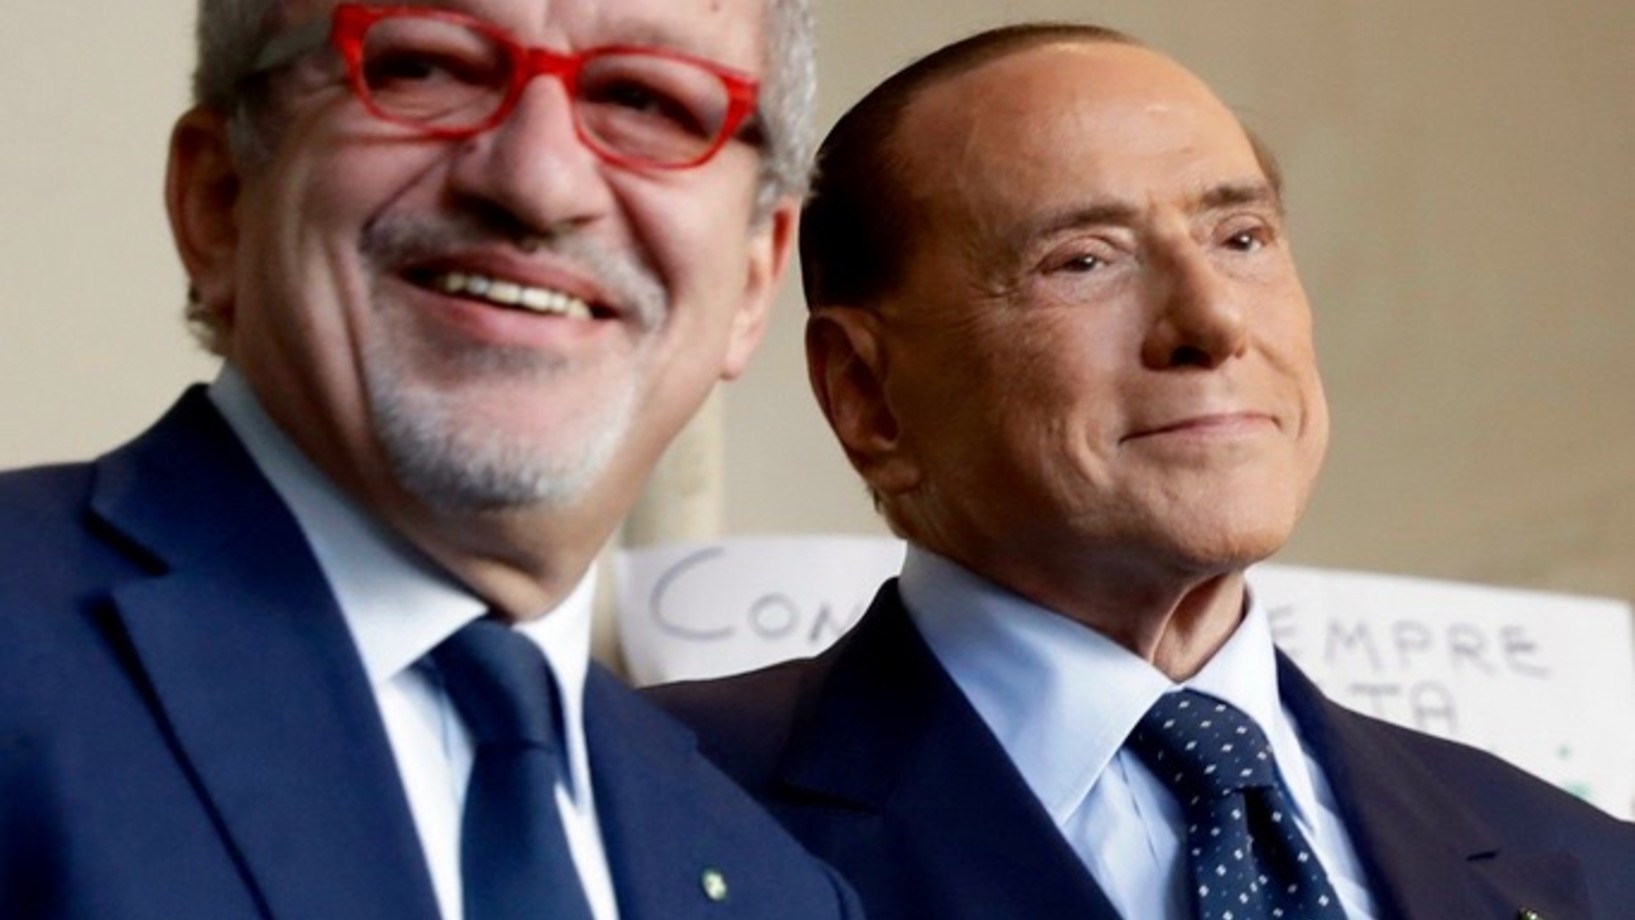 Lega-Regionalpräsident Roberto Maroni am Mittwoch mit Silvio Berlusconi in Mailand. (Foto: Keystone/AP/Luca Bruno)

